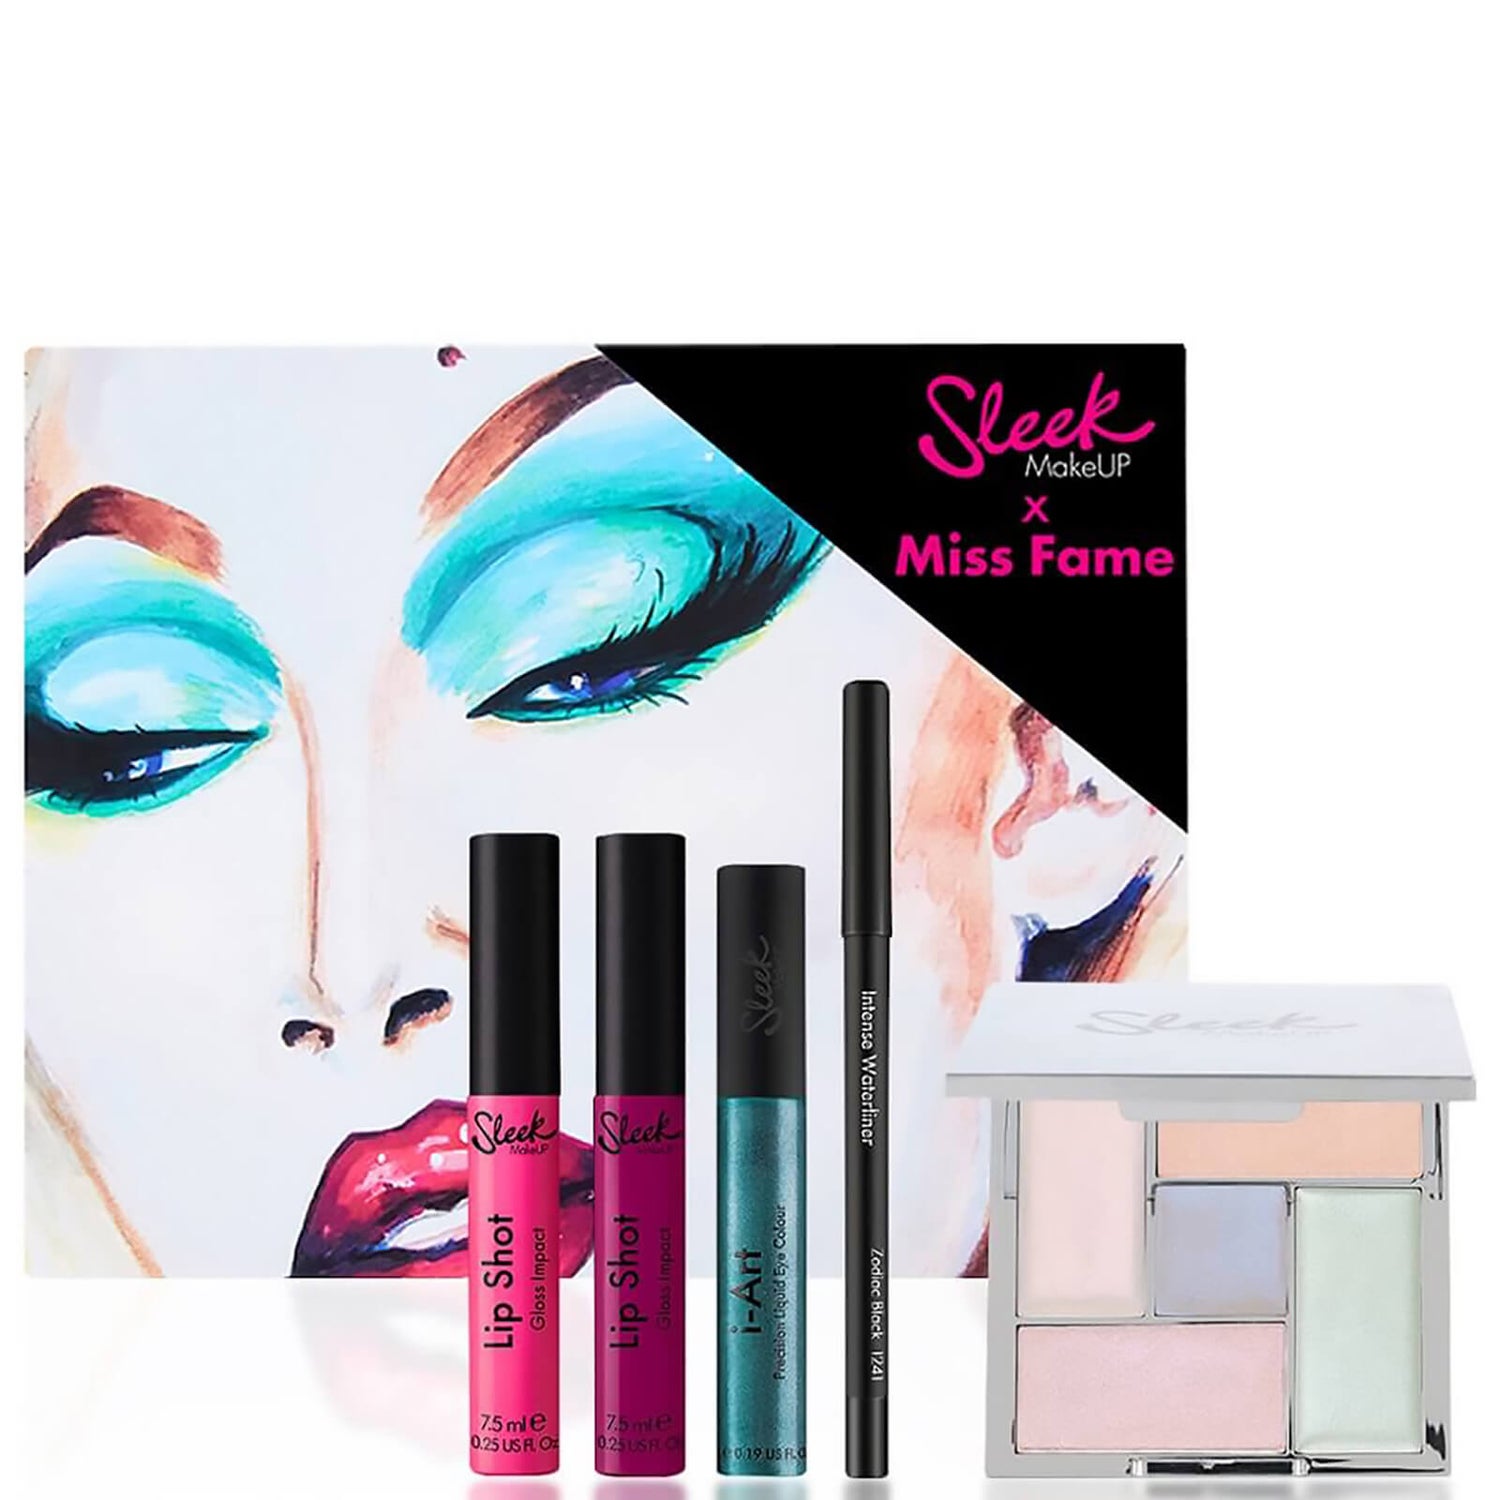 Sleek MakeUP X Miss Fame Collection (Worth £31.95)